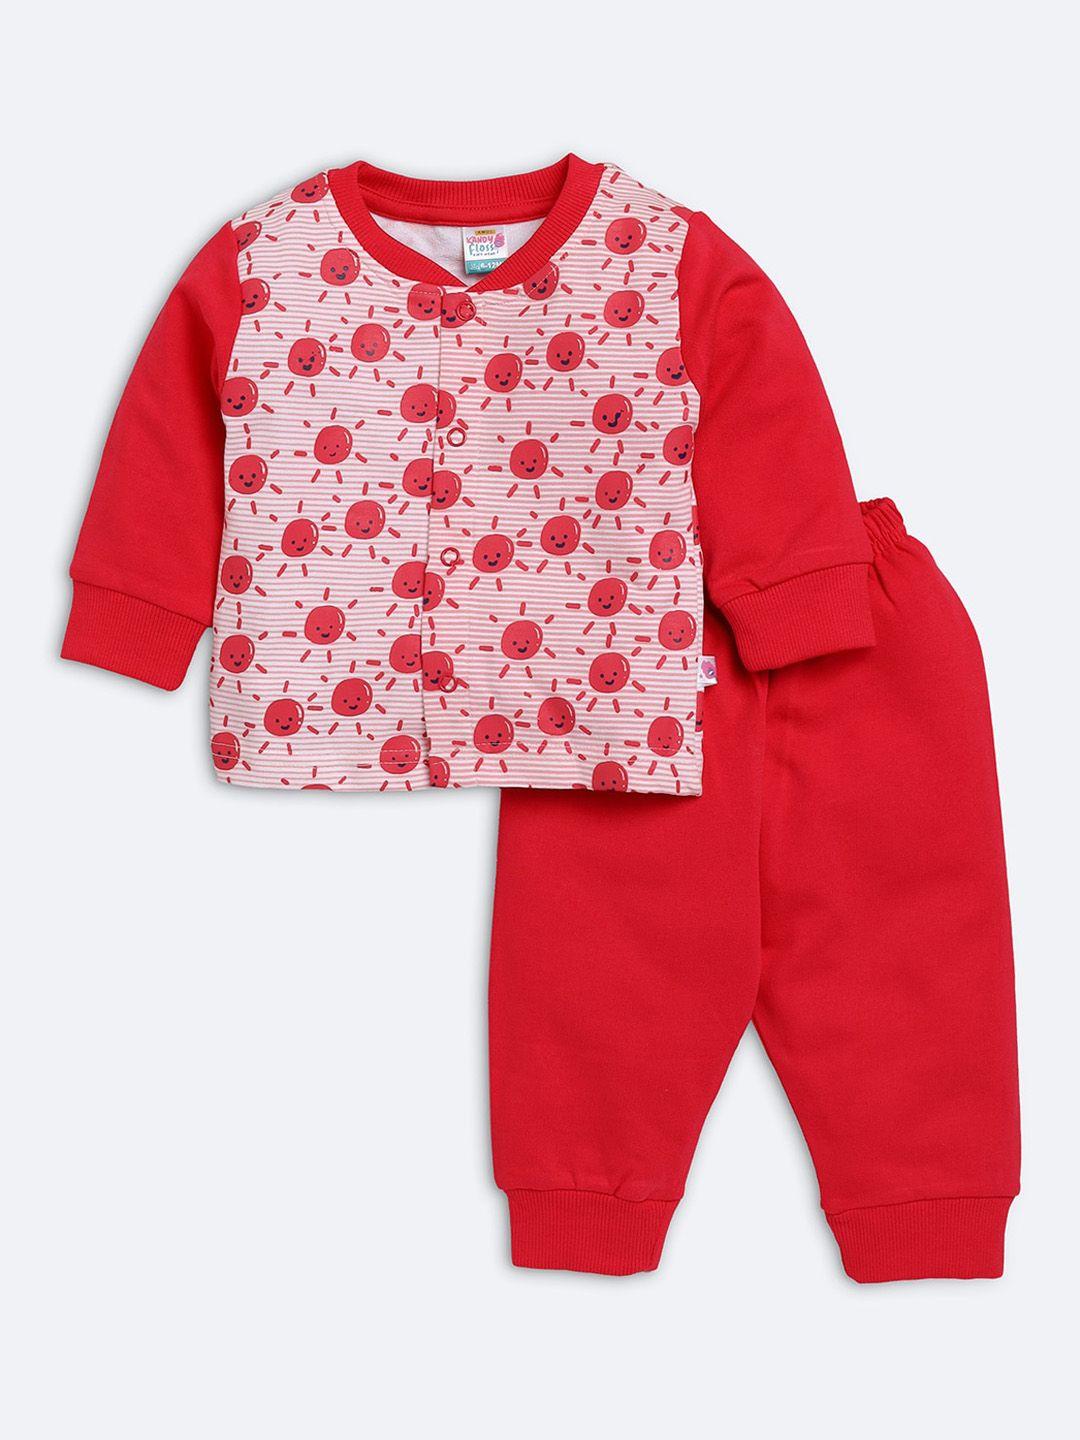 AMUL Kandyfloss Unisex Kids Red & White Pure Cotton Printed clothing set Set